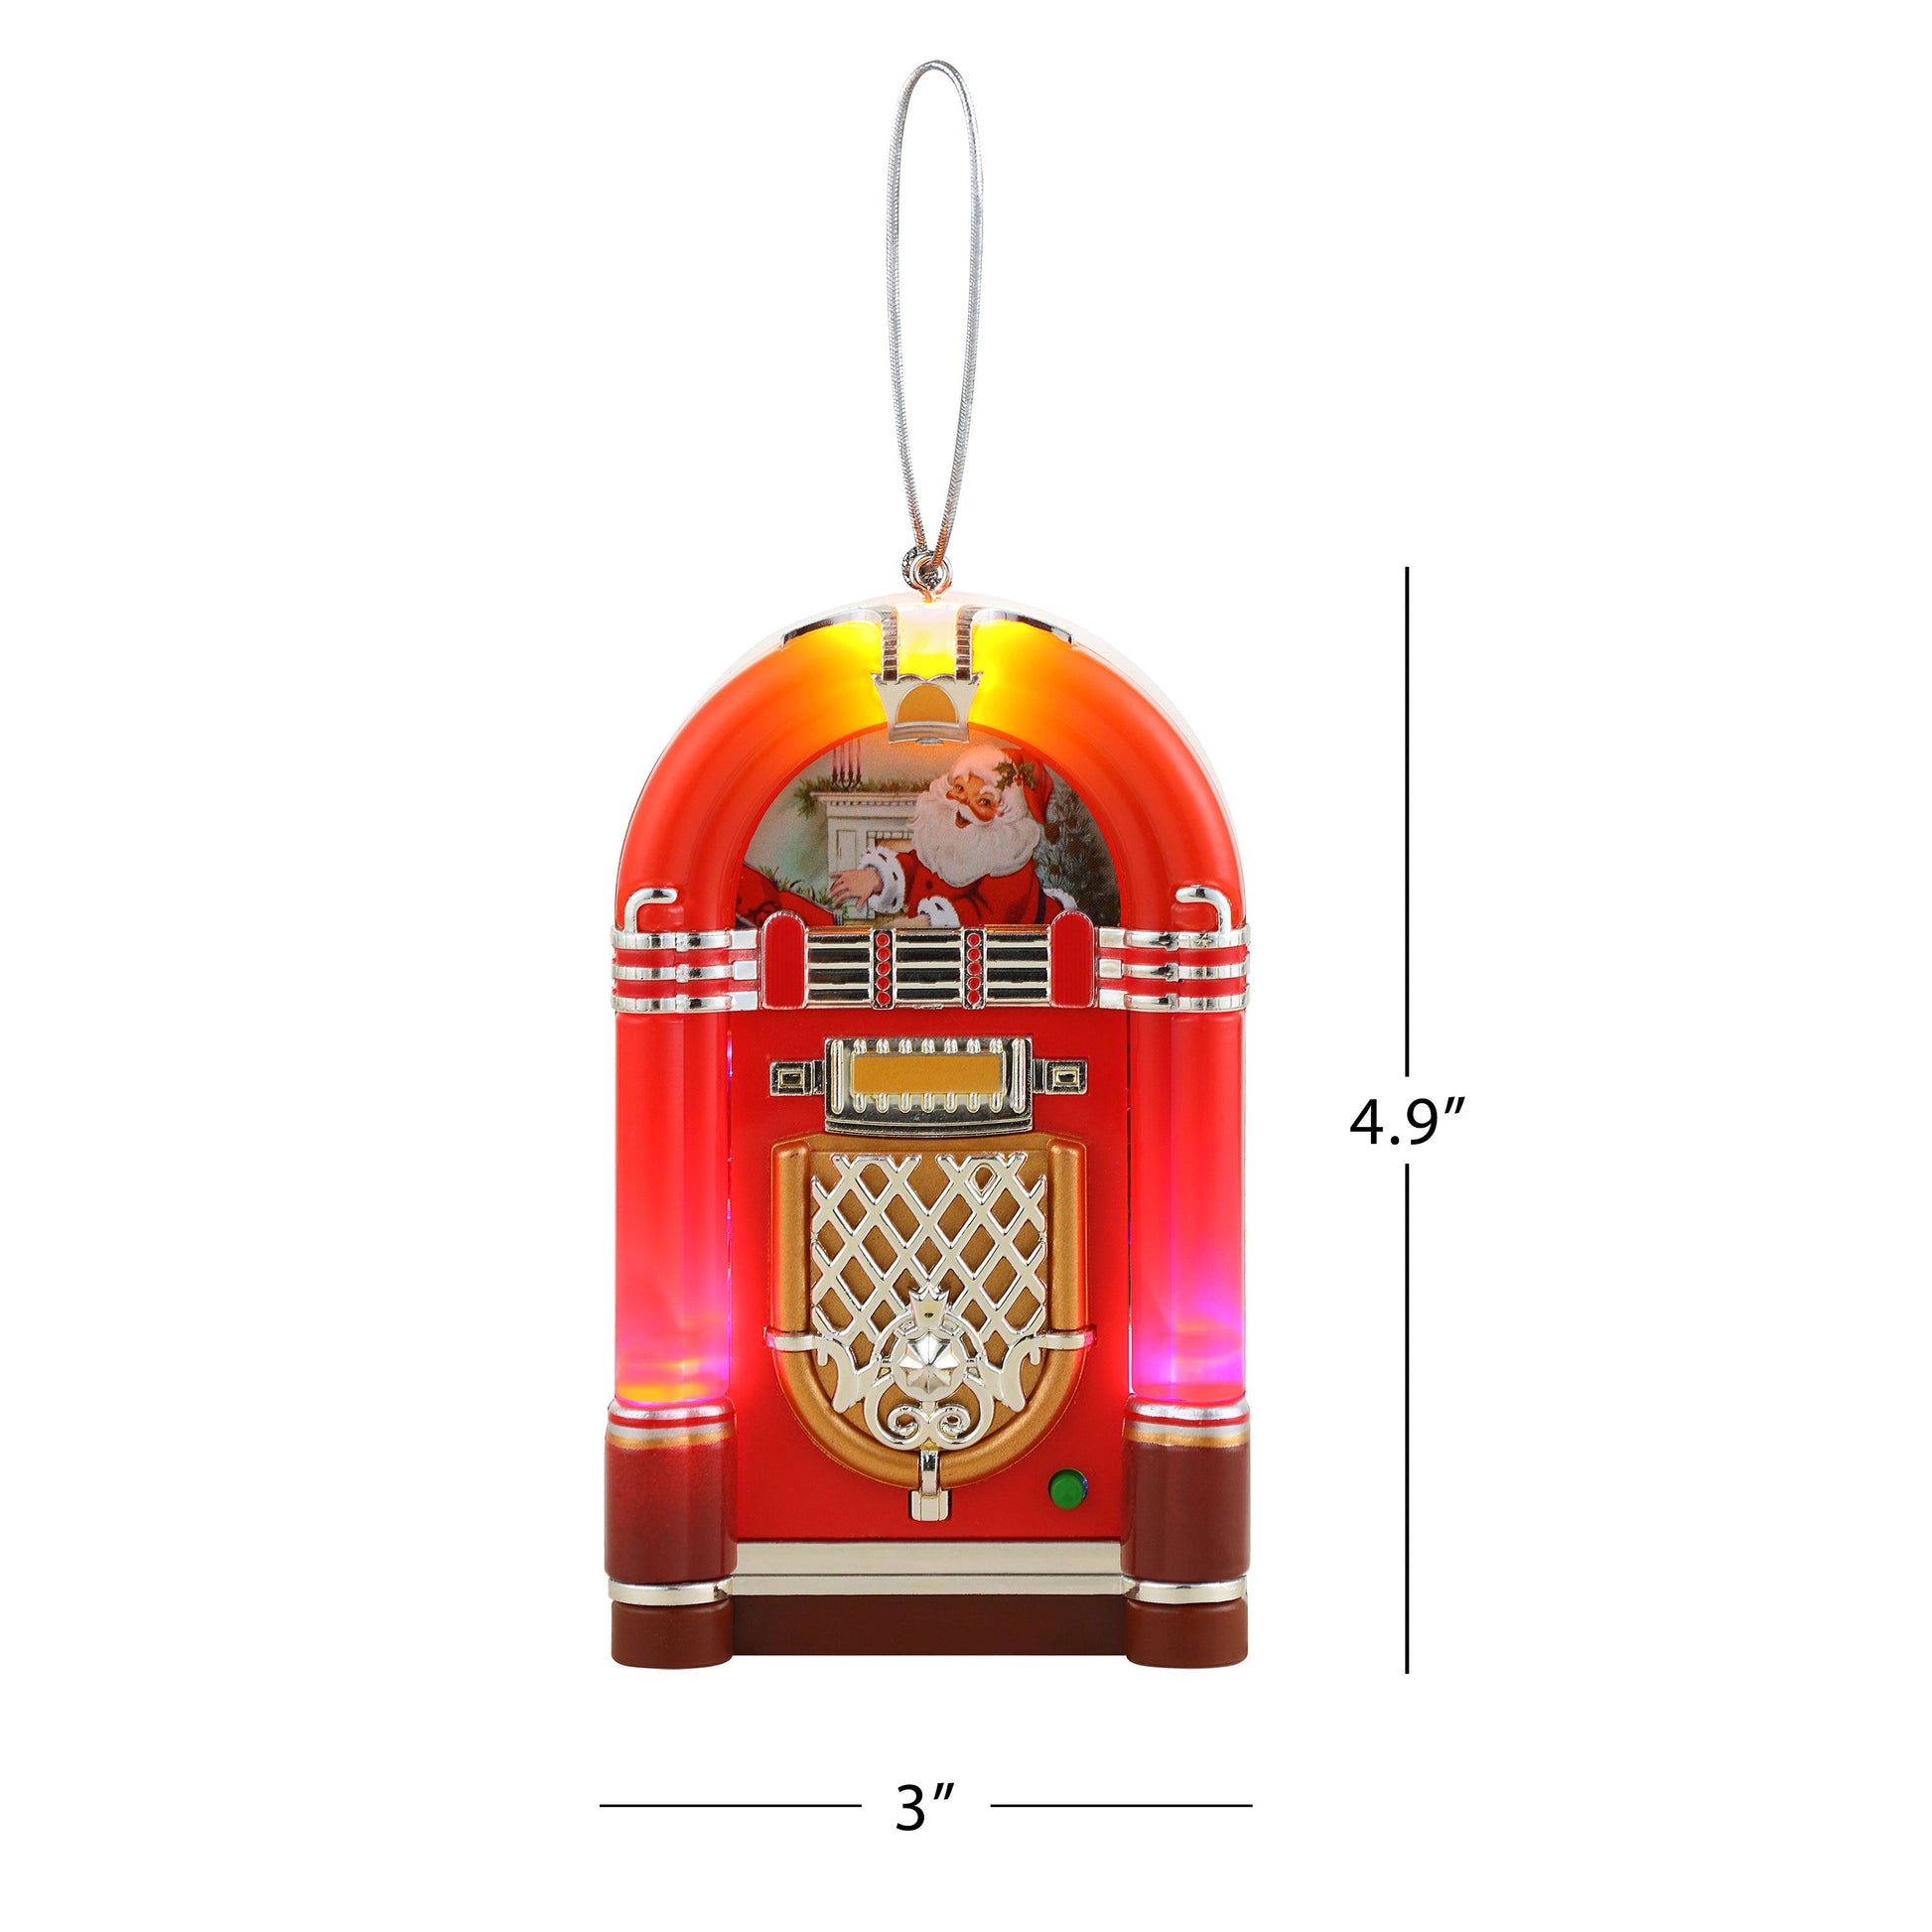 4.9" Retro Jukebox Ornament - Red - Mr. Christmas